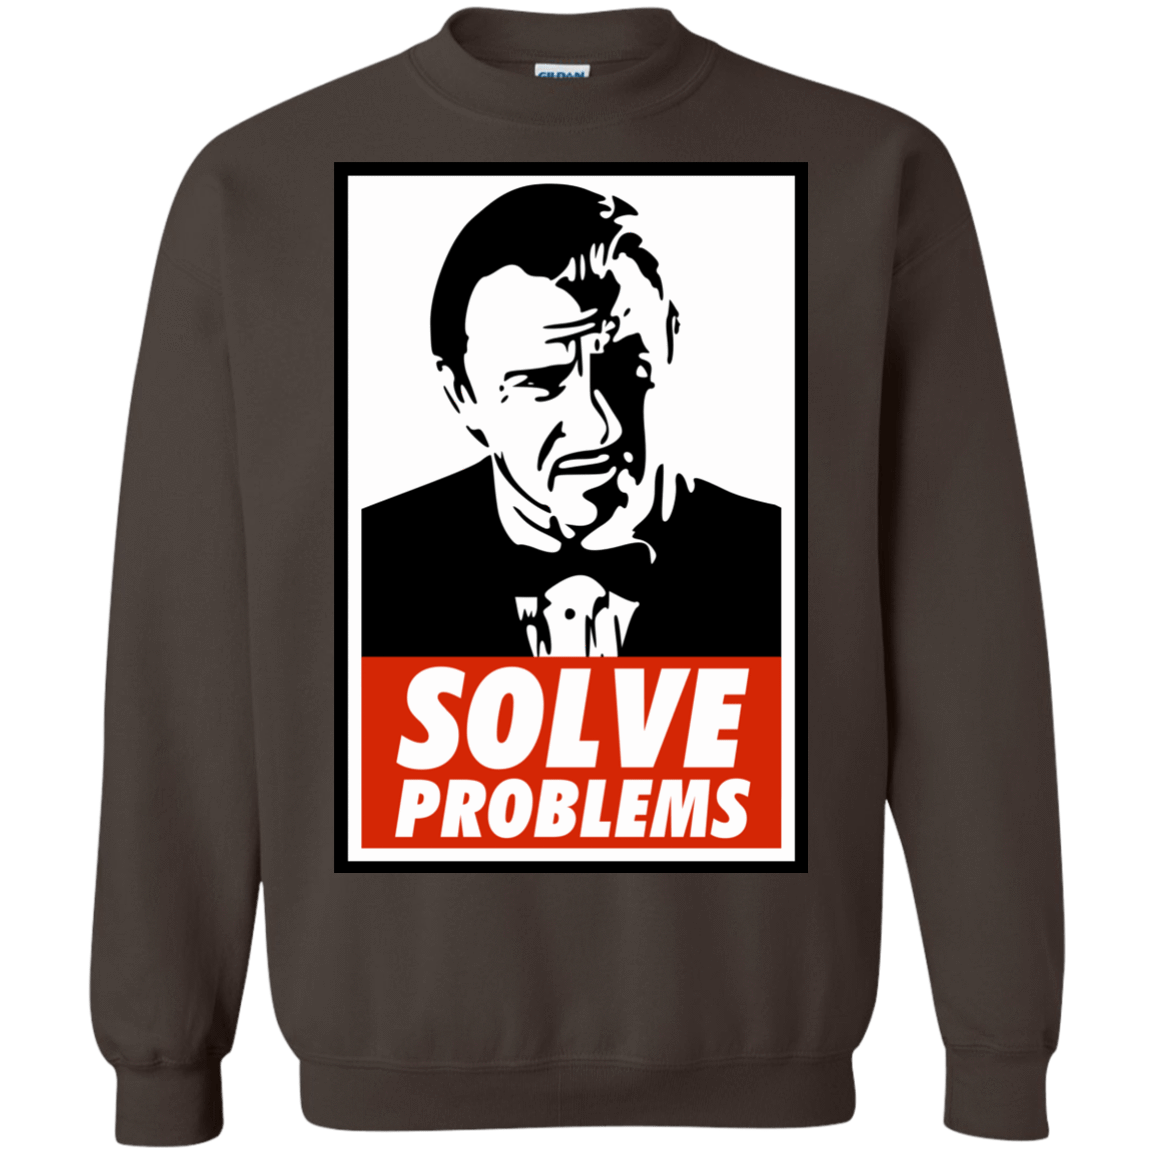 Sweatshirts Dark Chocolate / Small Solve problems Crewneck Sweatshirt